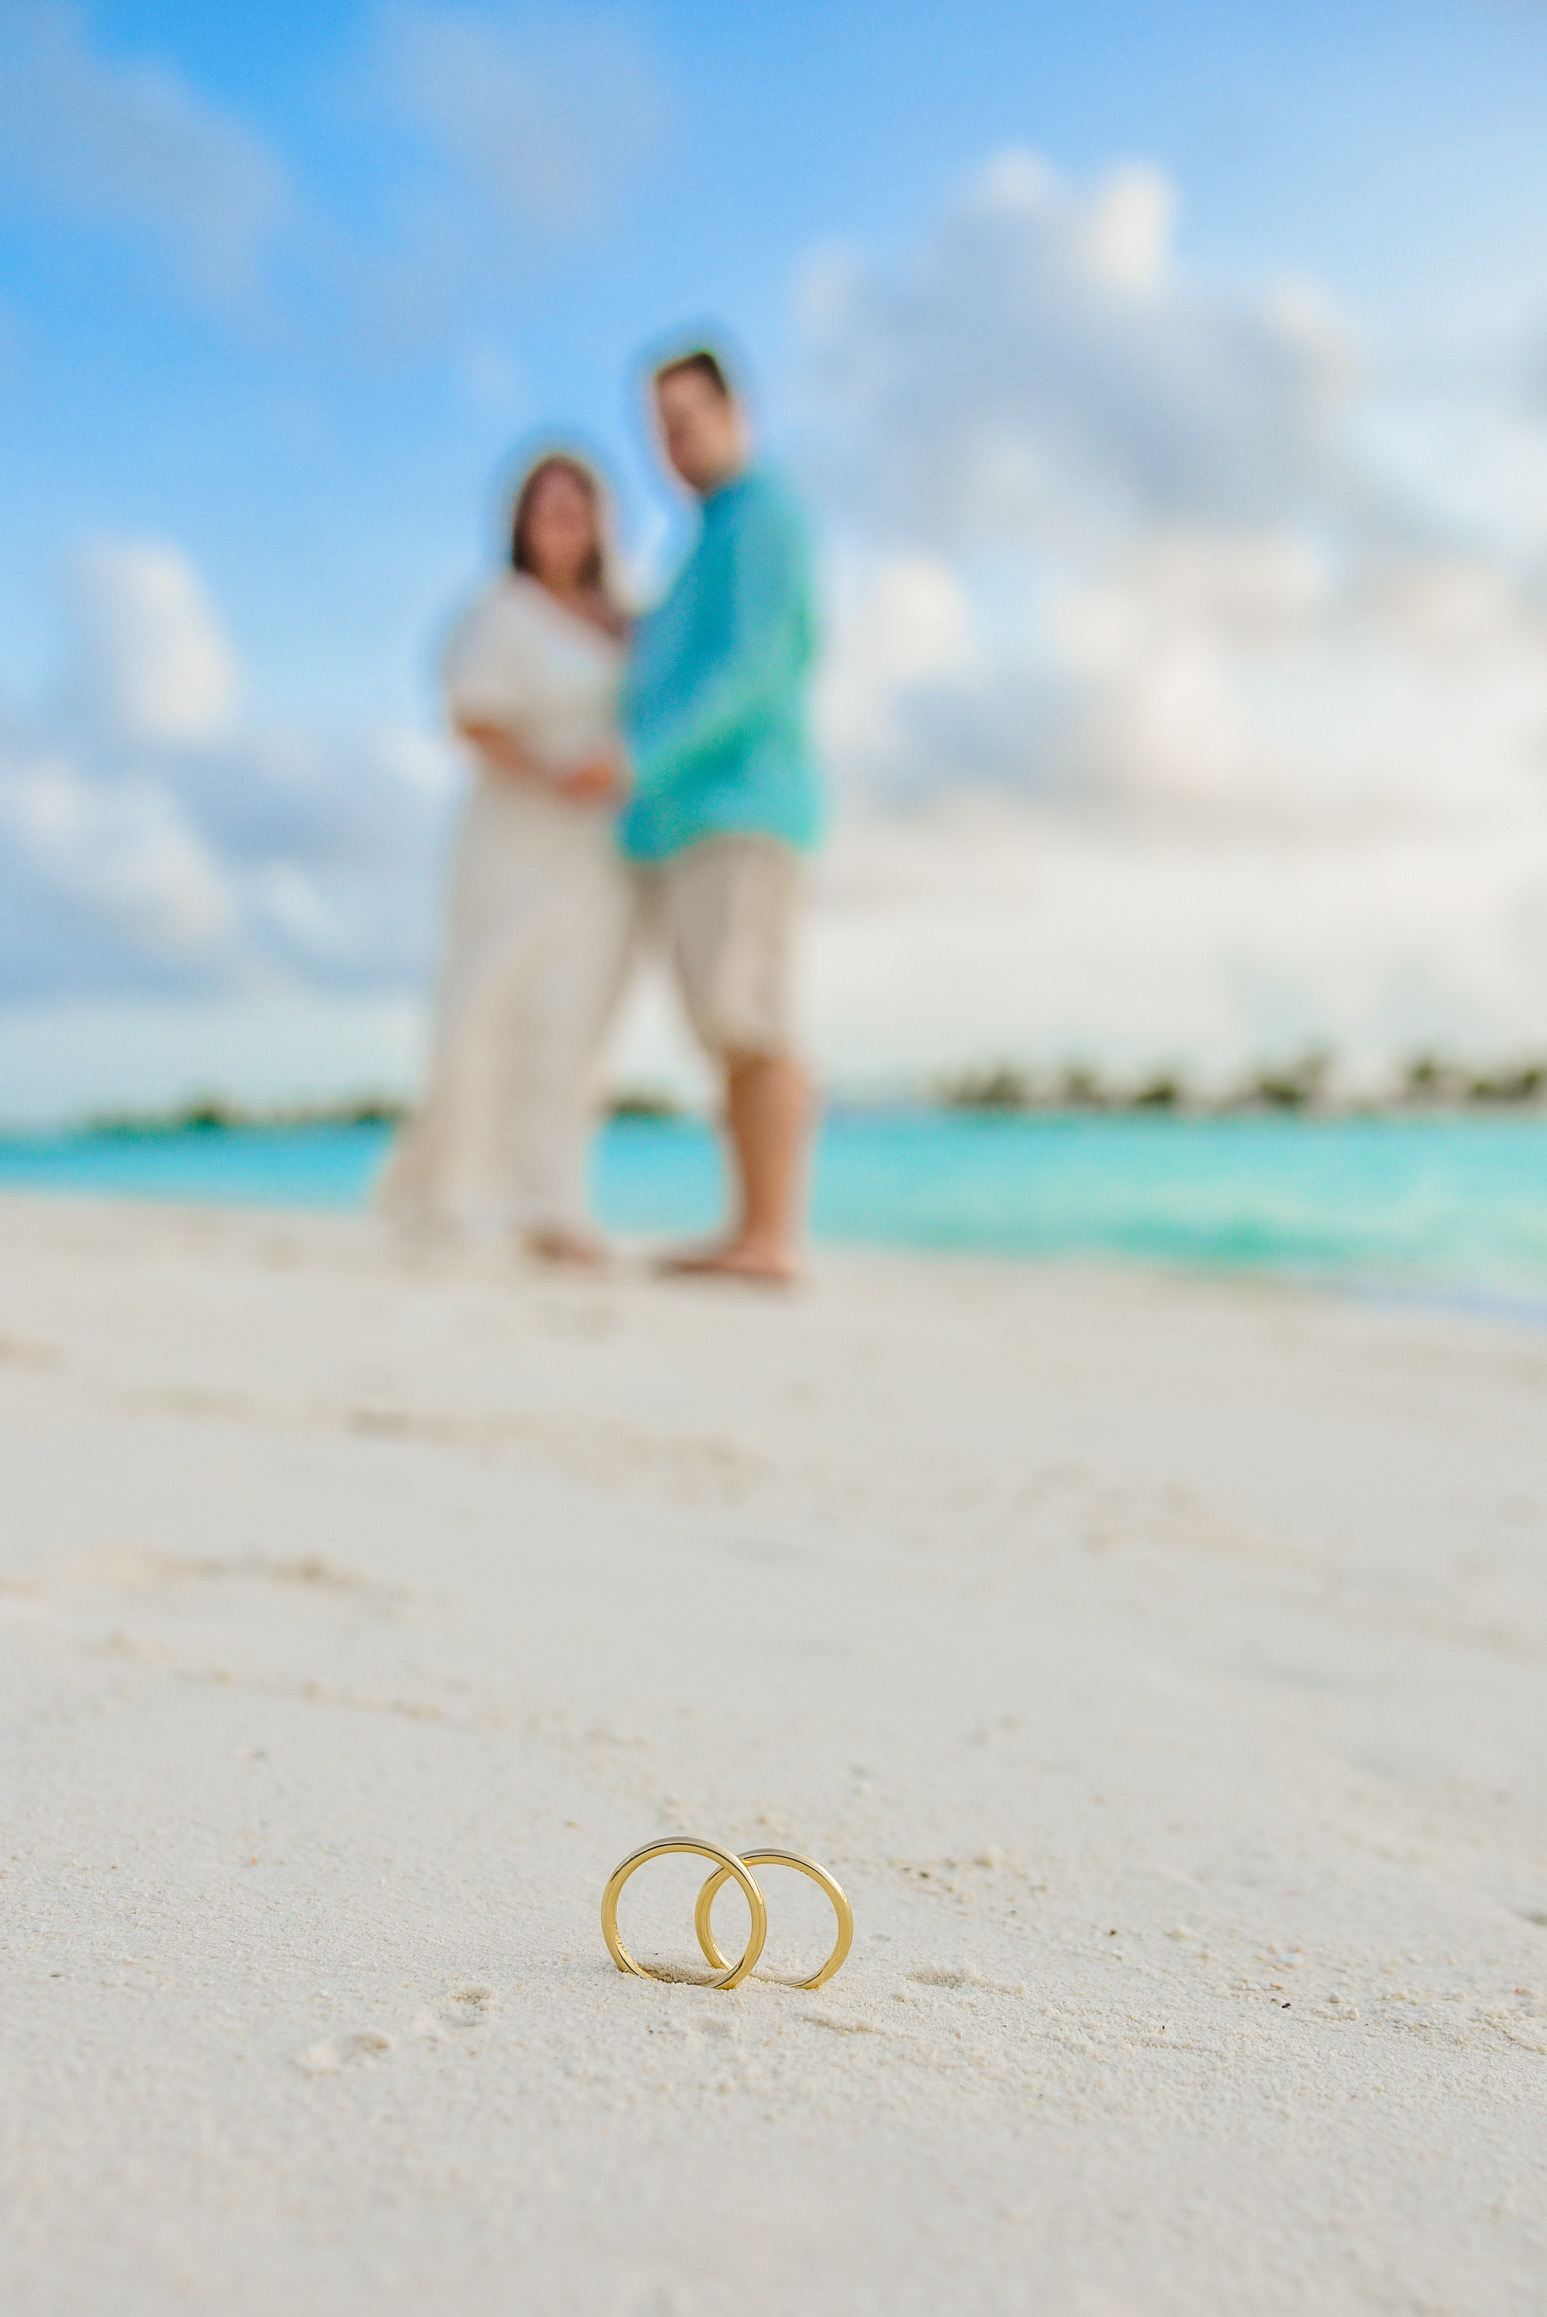 pedido de casamento surpresa em Maldivas